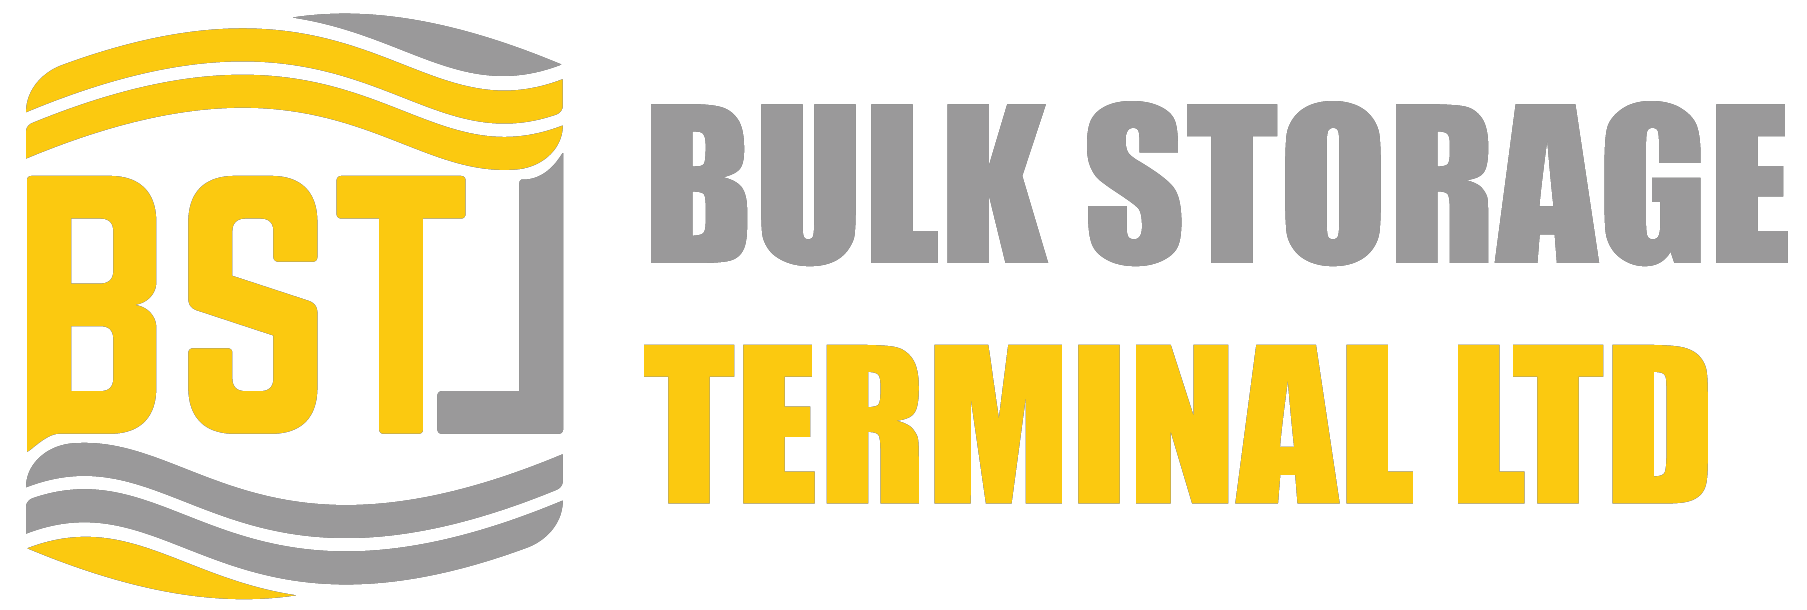 Bulk Storage Terminal Limited